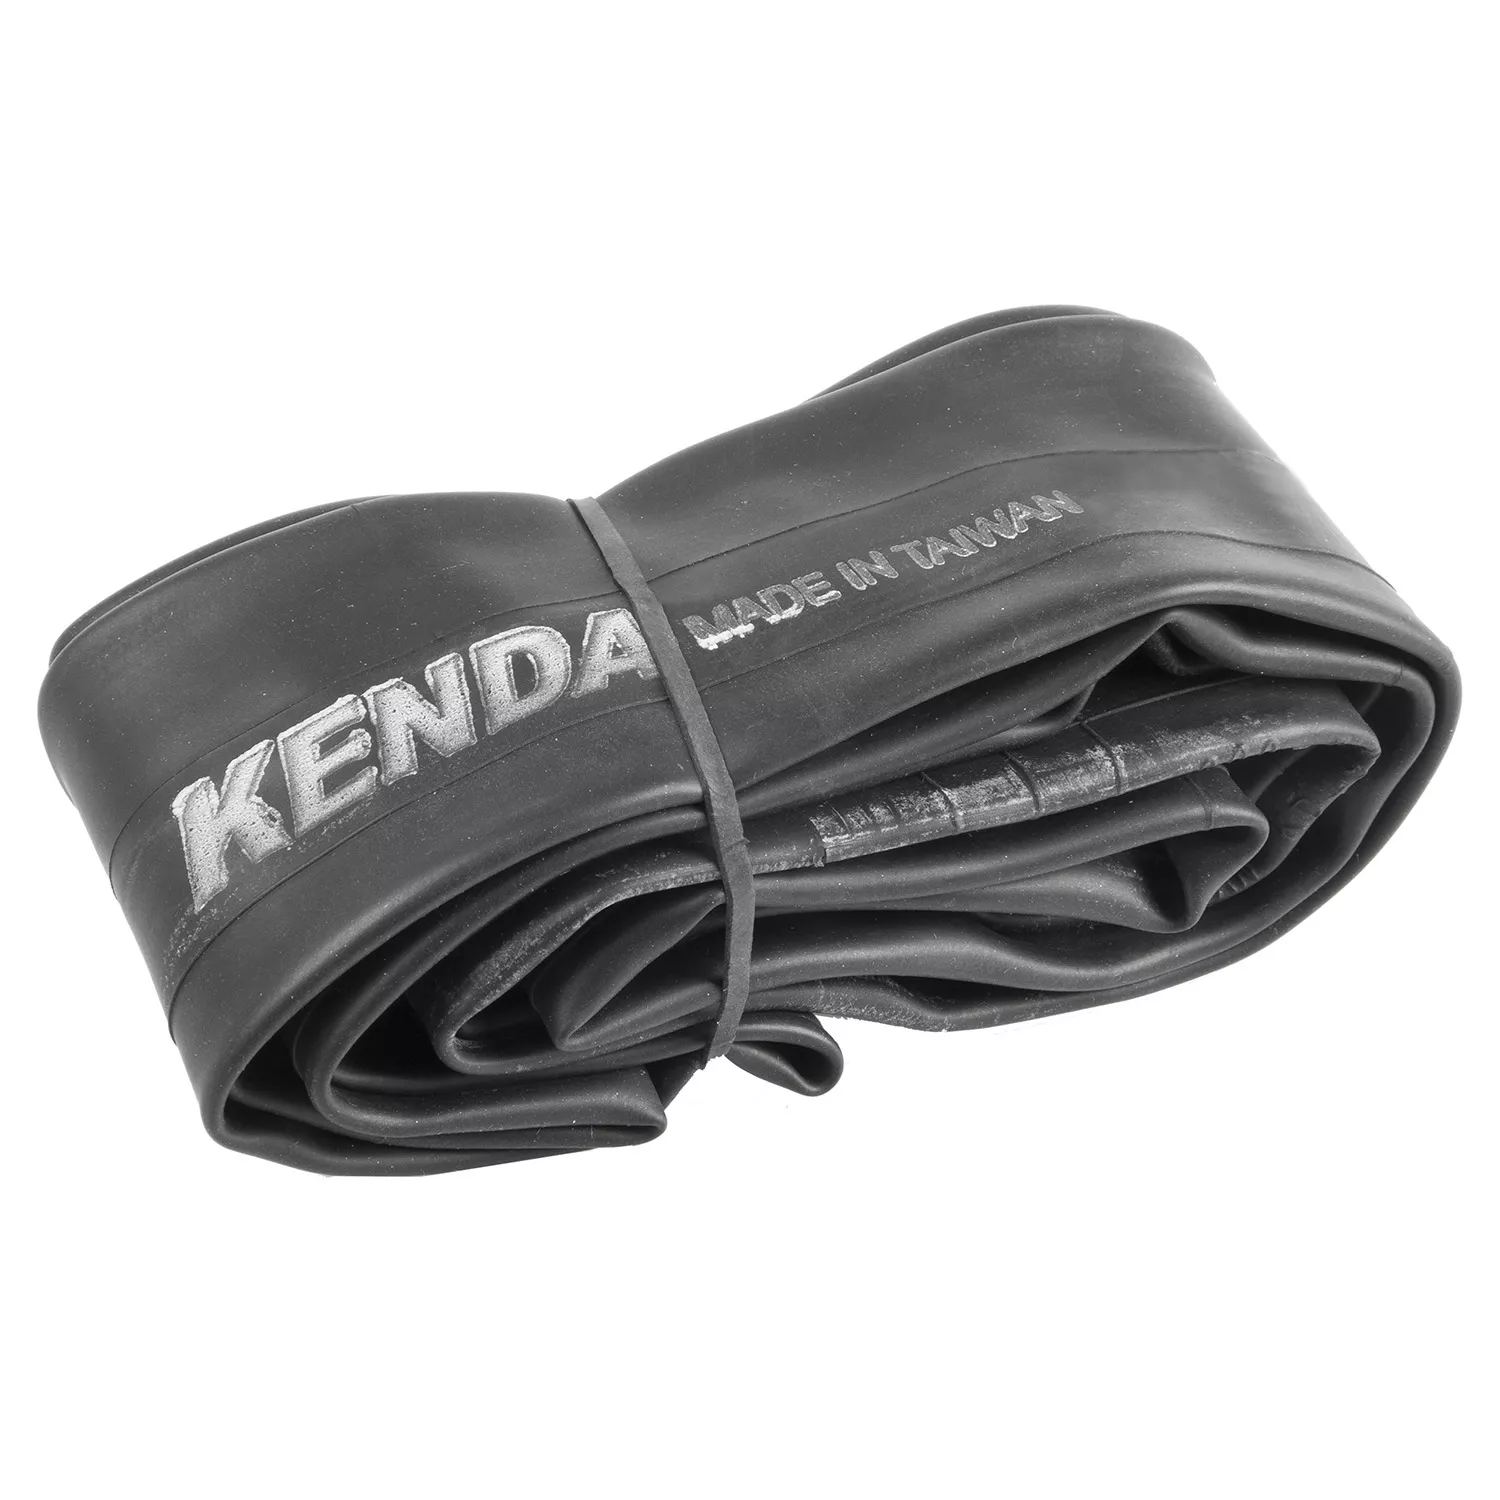 KENDA bicycle inner tube 27.5 inch x 2.8 -3.2 inch FV